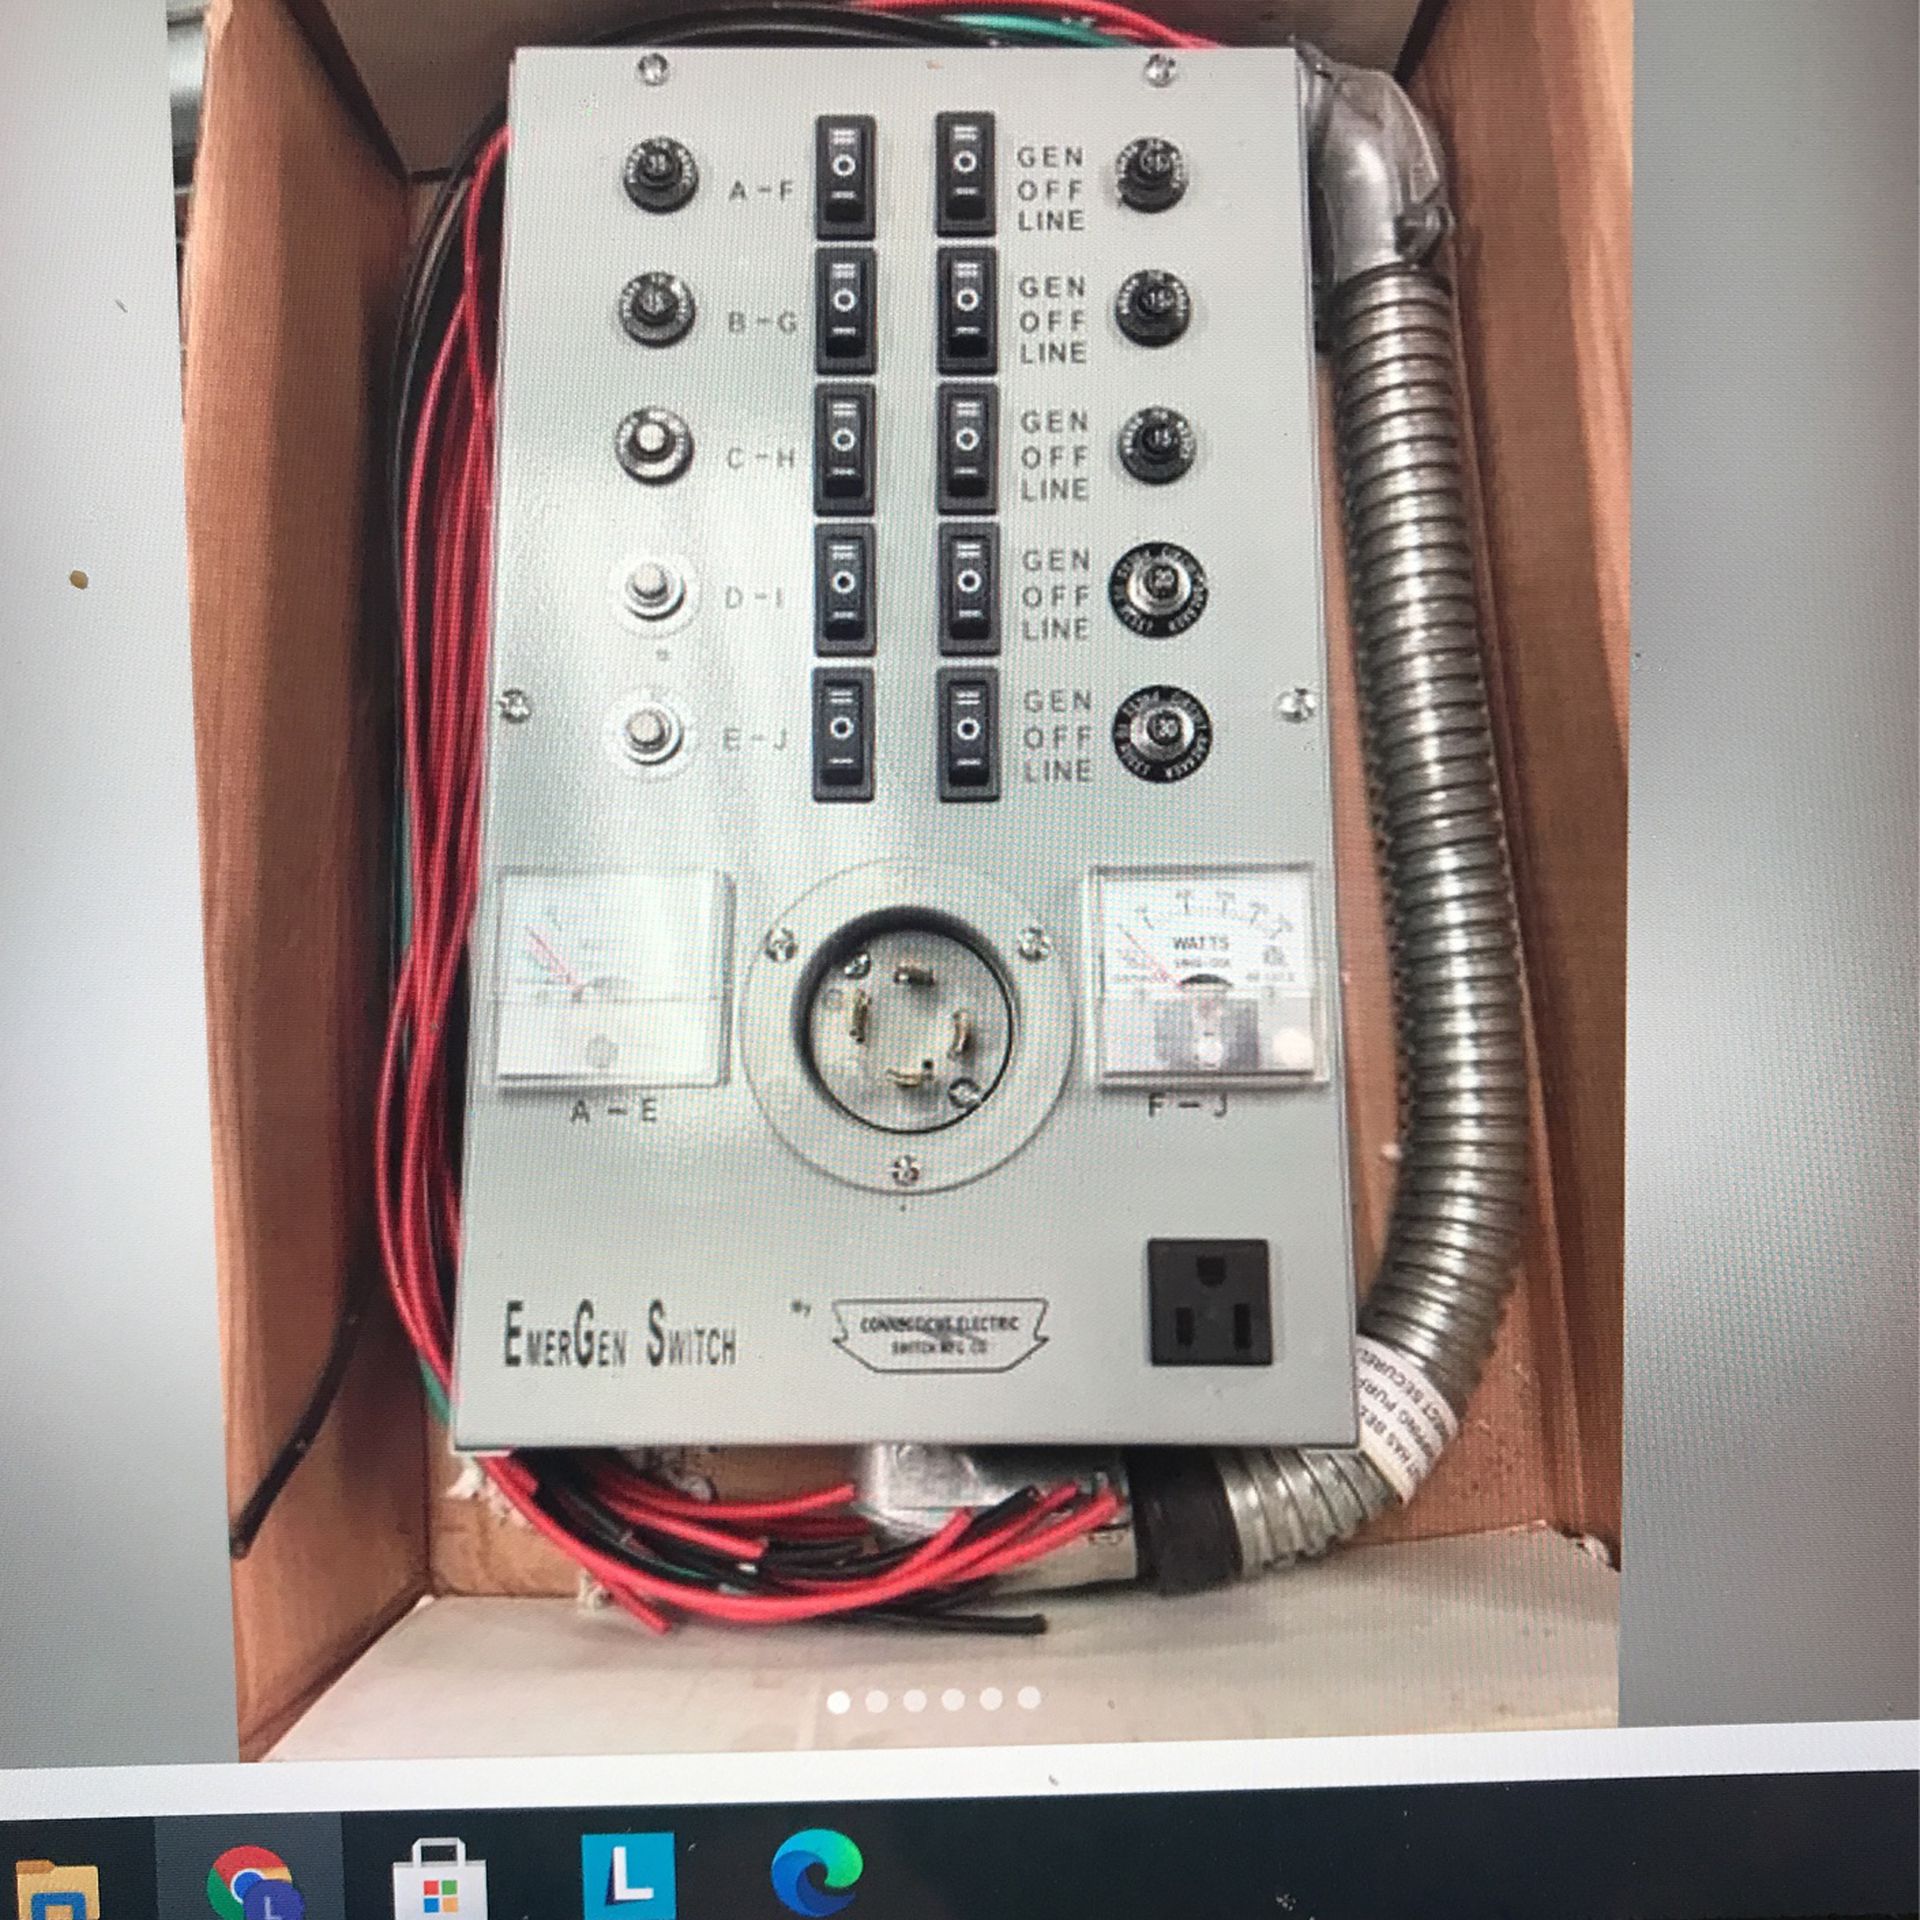 EMERGEN Manual Transfer Switch Model # 10-7500 For Portable Generator 